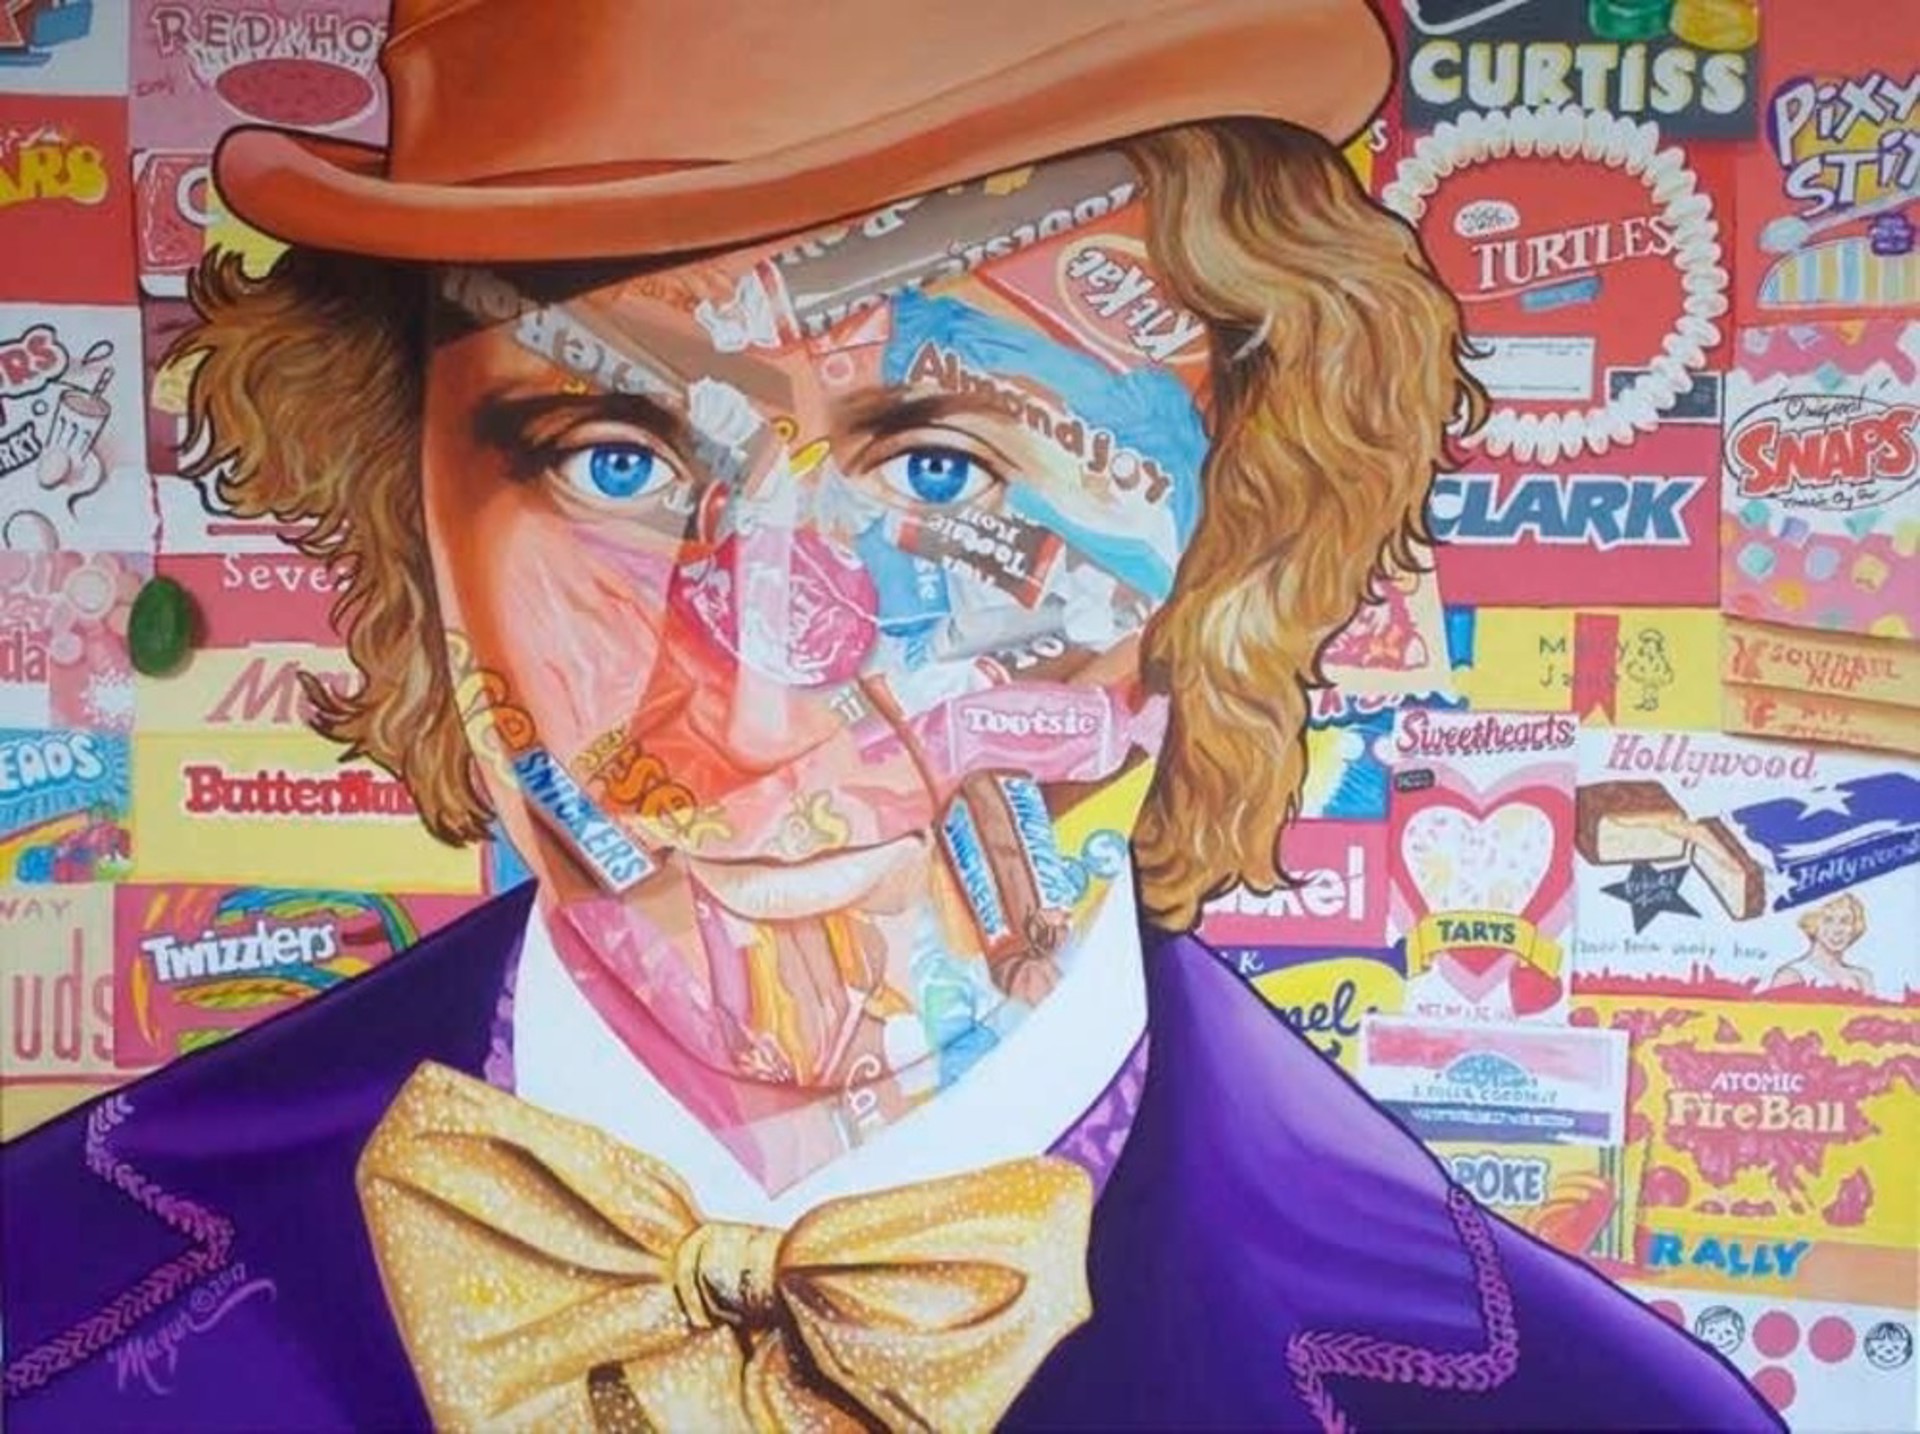 Candy Man Willy Wonka by Ruby Mazur